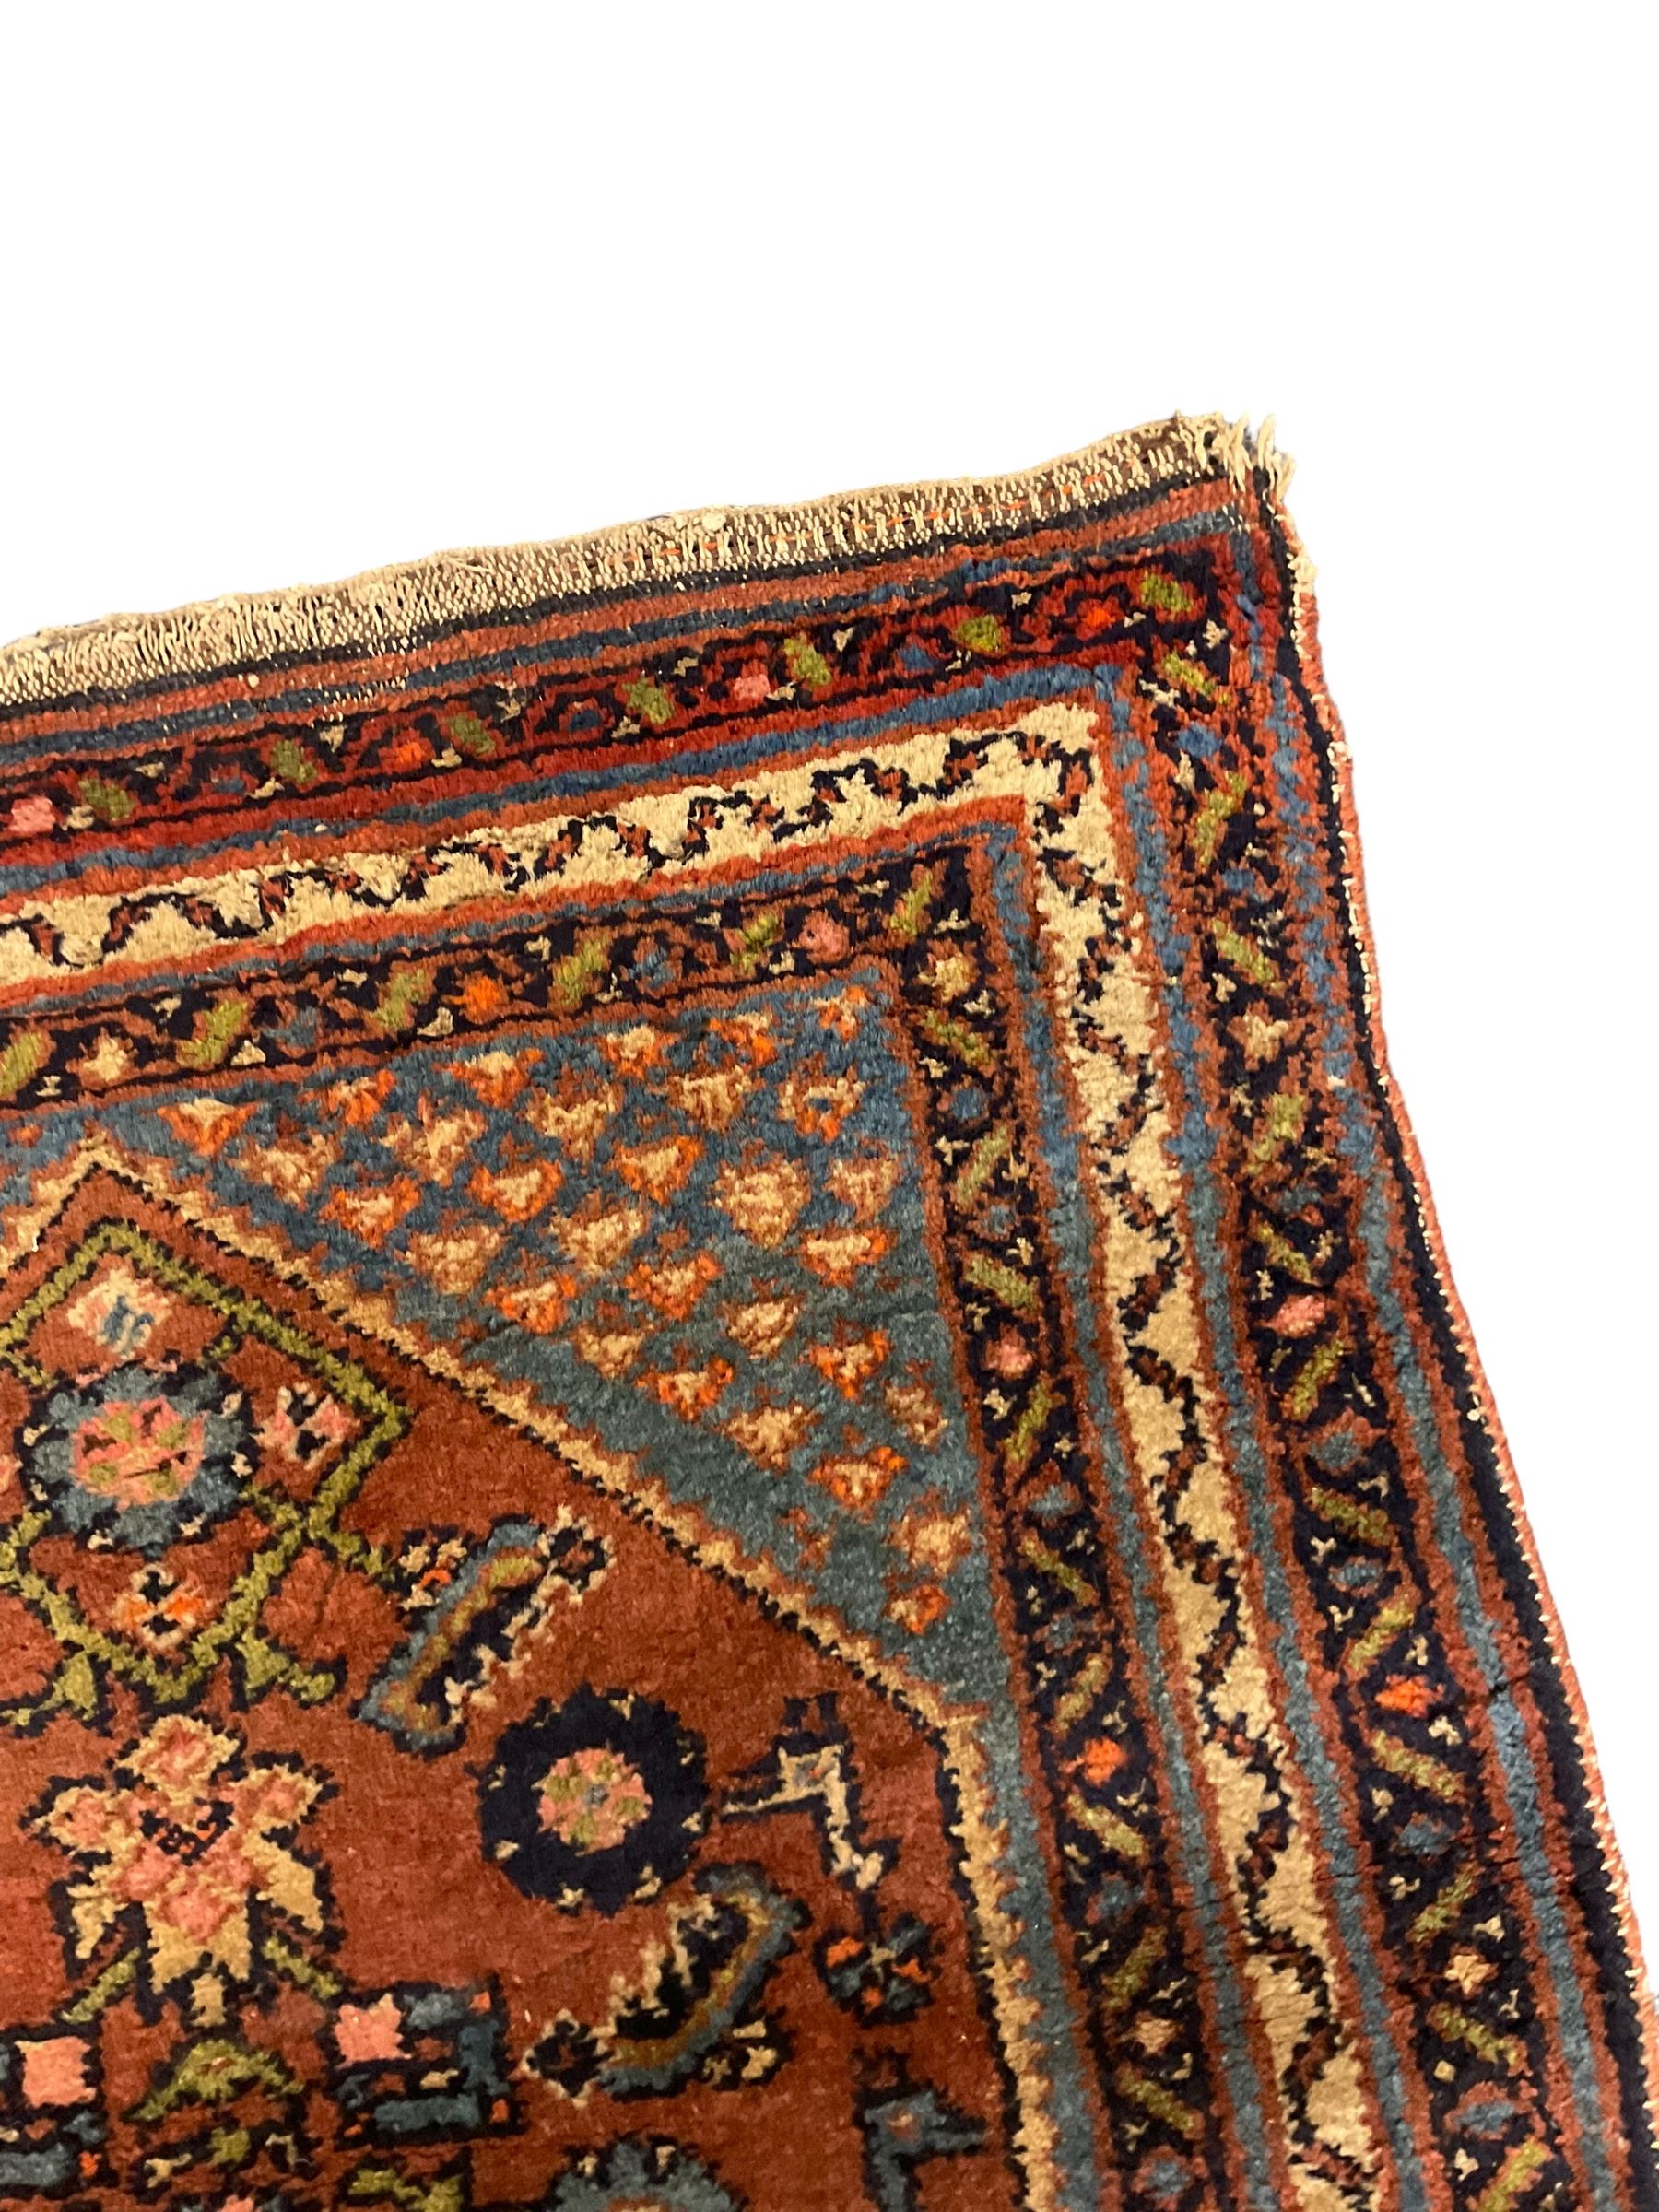 Small Persian rug or mat - Image 4 of 6